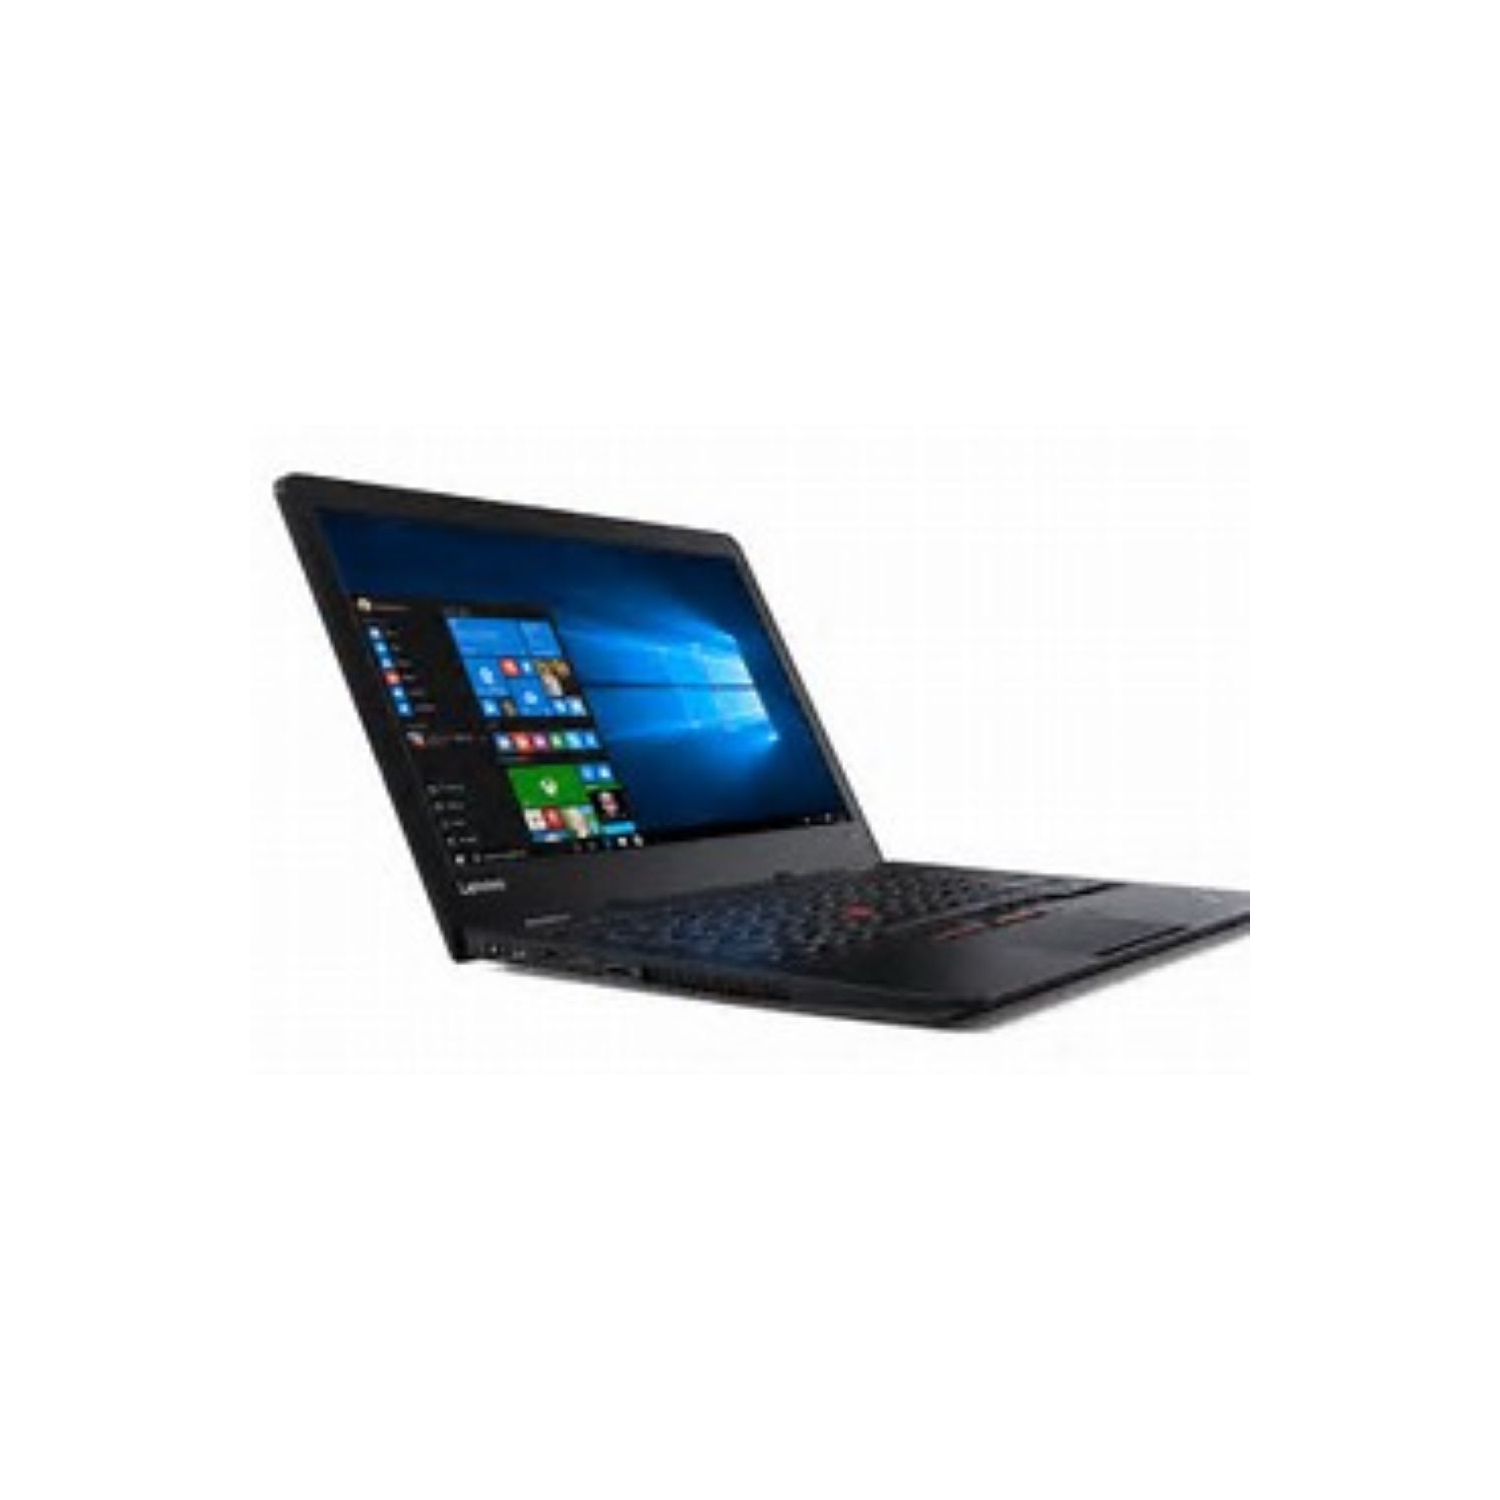 Refurbished (Good) - Lenovo L470 Laptop Notebook - Intel Core i3-7100U, 2.4GHz, 8GB, 256GB, 14" TFT, Windows 10 PRO - 90 Day Warranty